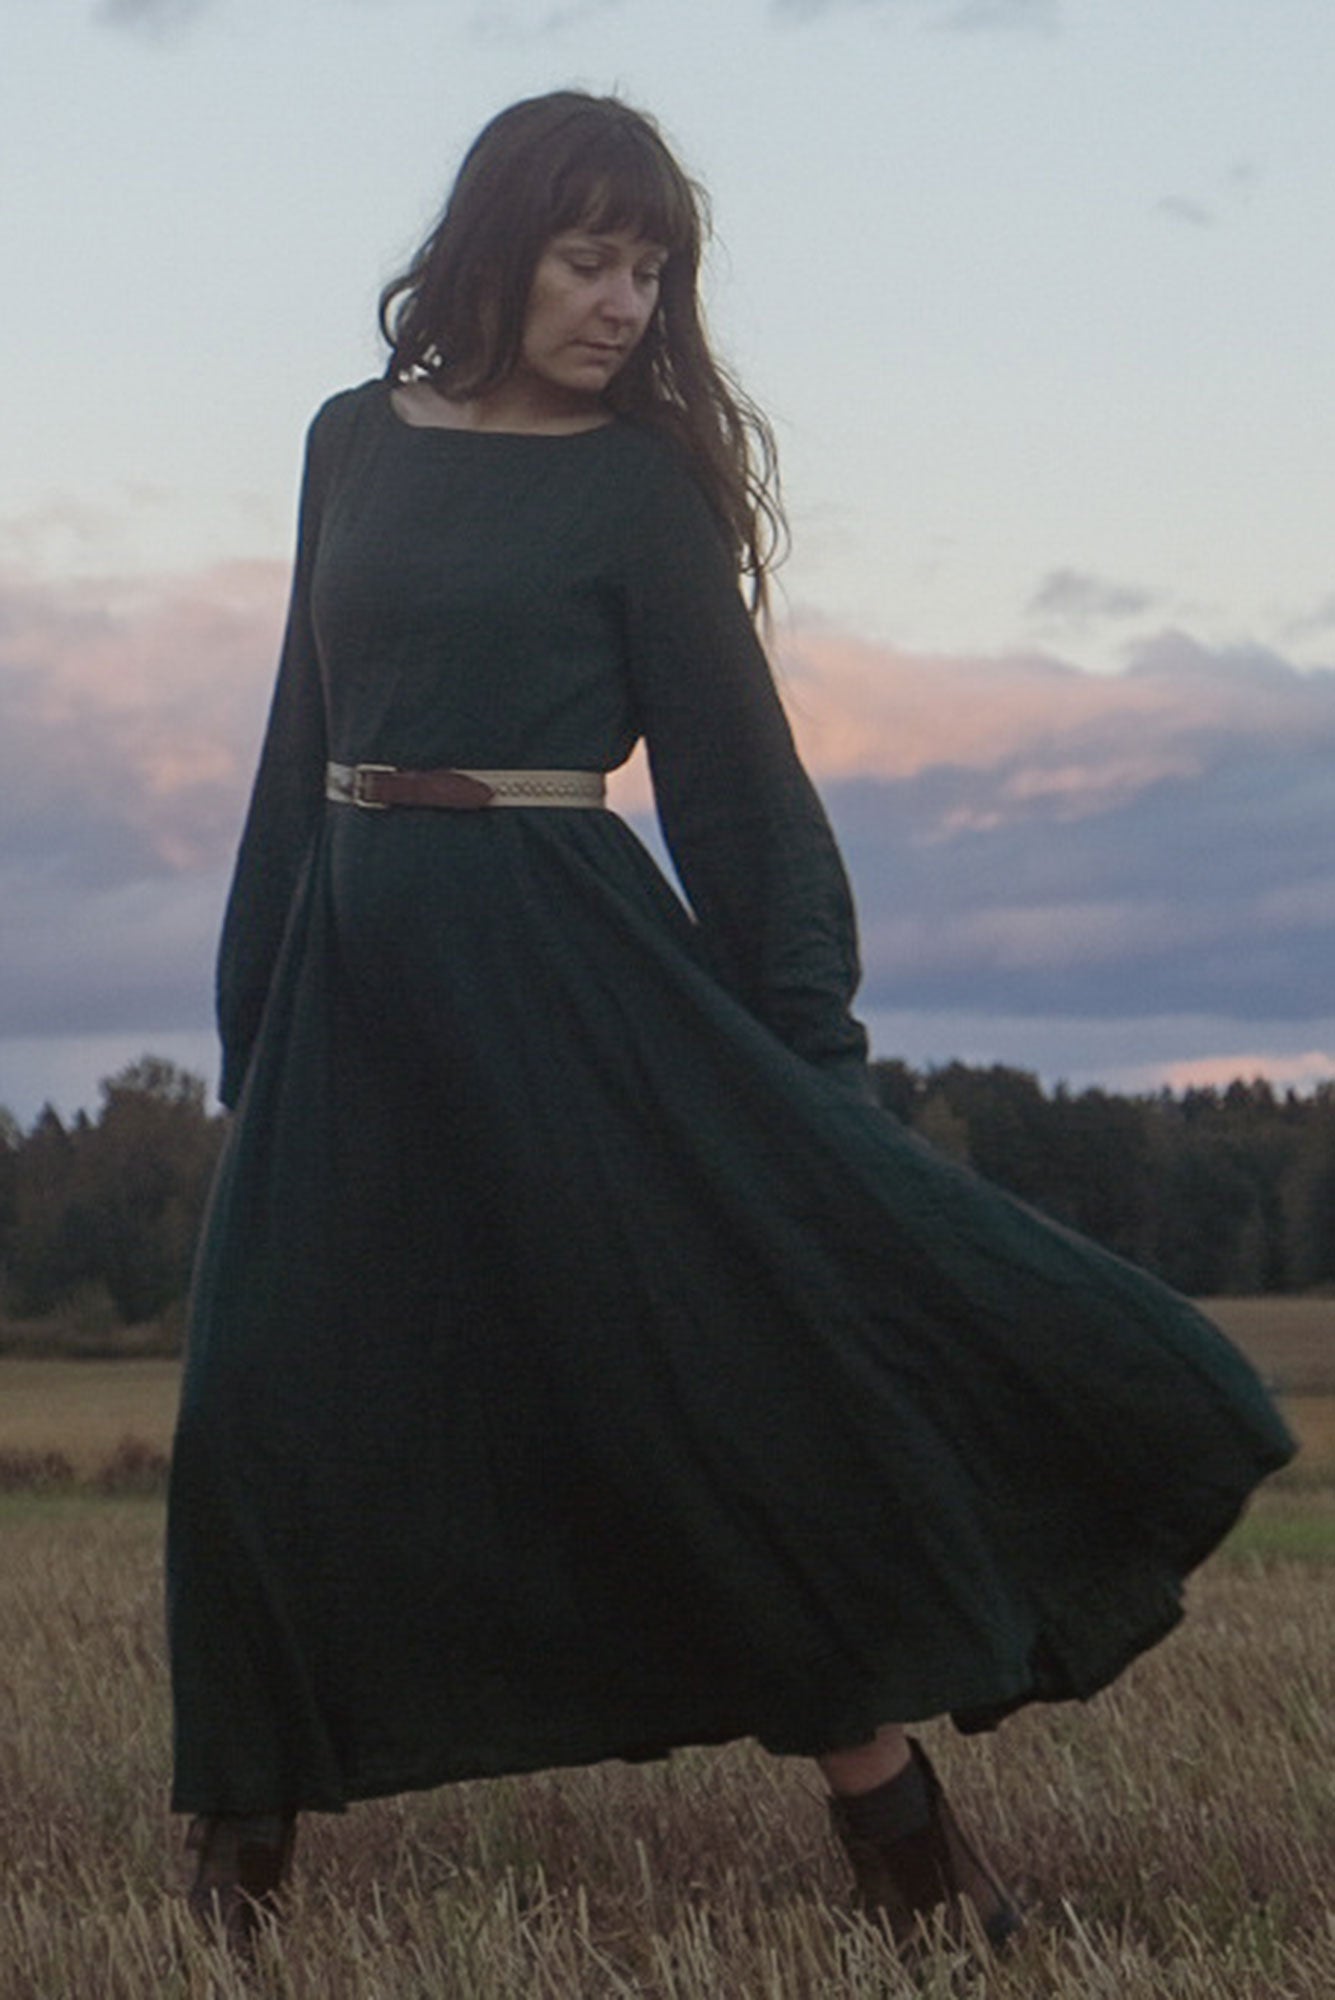 Women Vintage inspired Medieval dress  312501